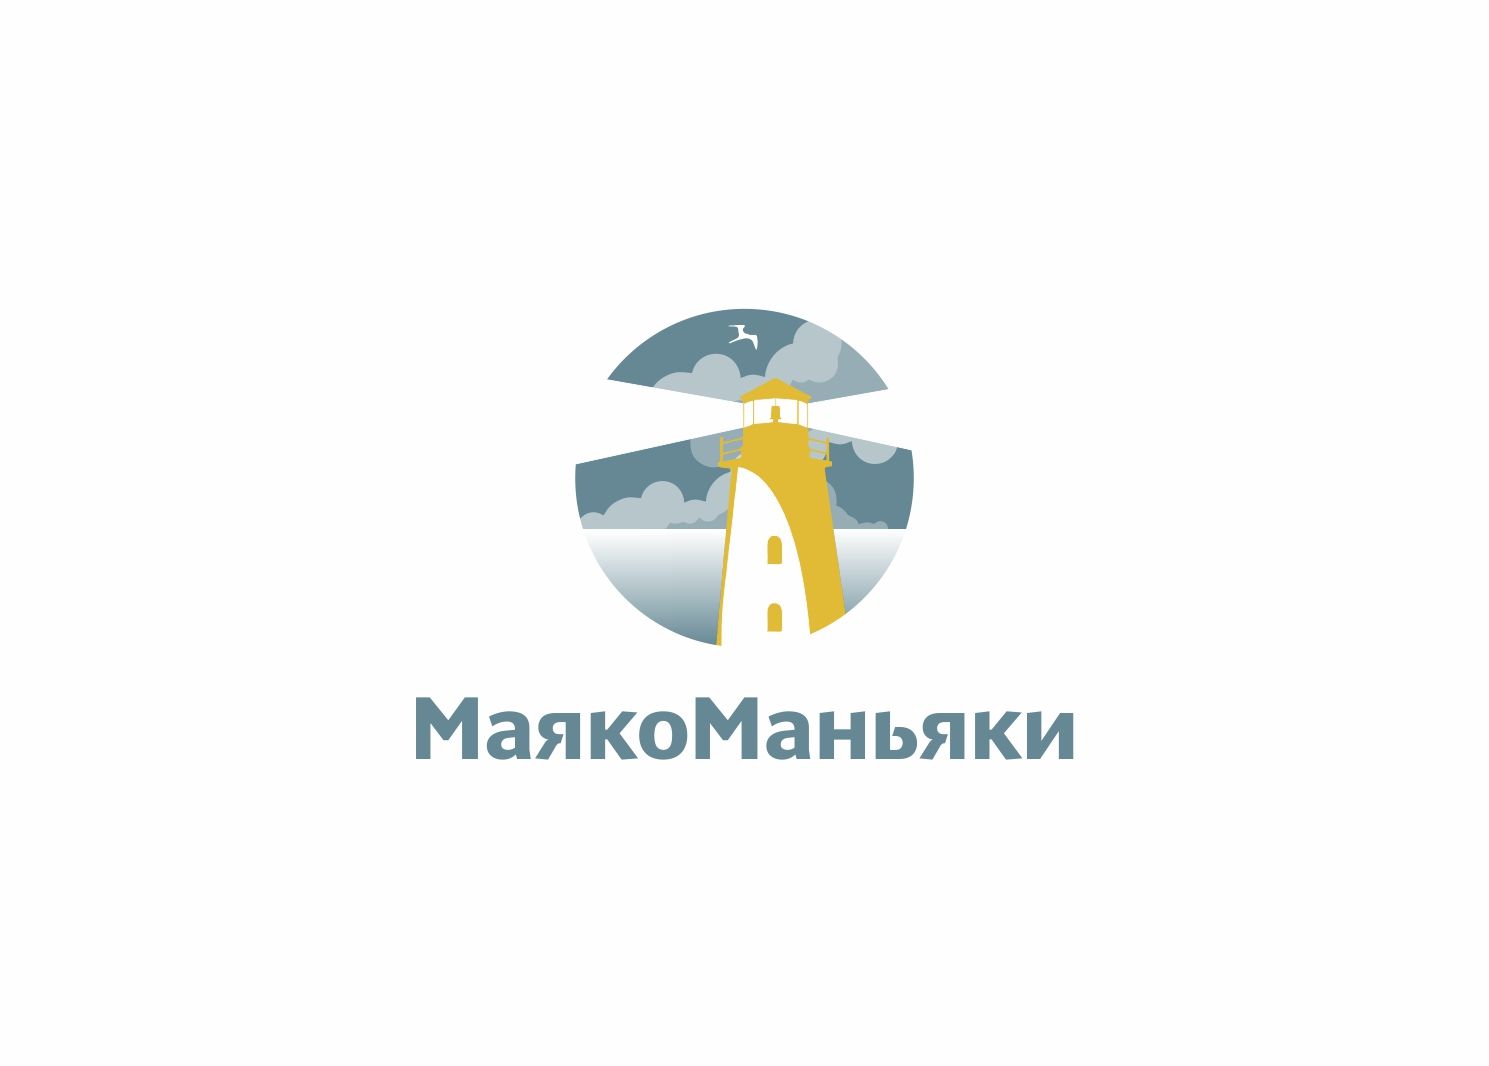 Логотип для МаякоМаньяки - дизайнер Lara2009